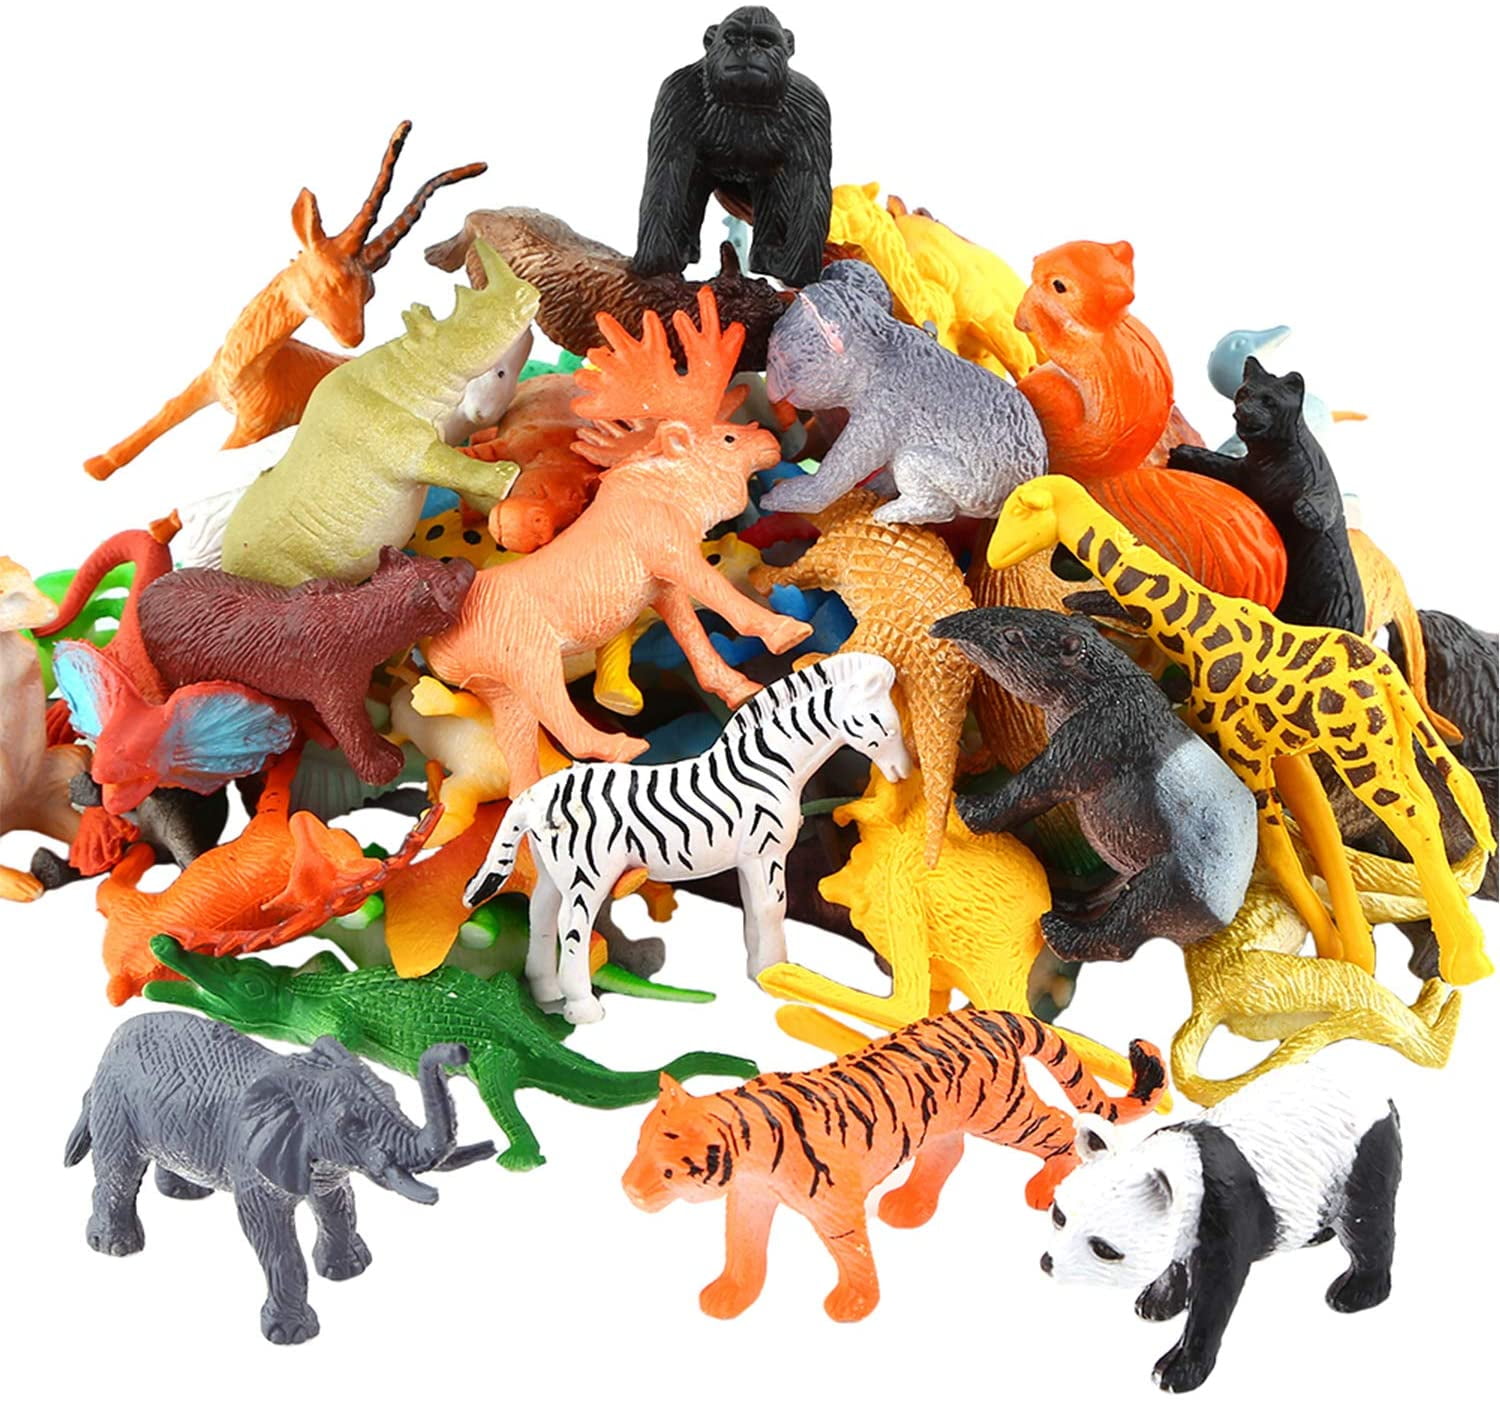 Decor Kids Toy Wild Animal Model Zoo Series Figurines Miniature Wildlife 